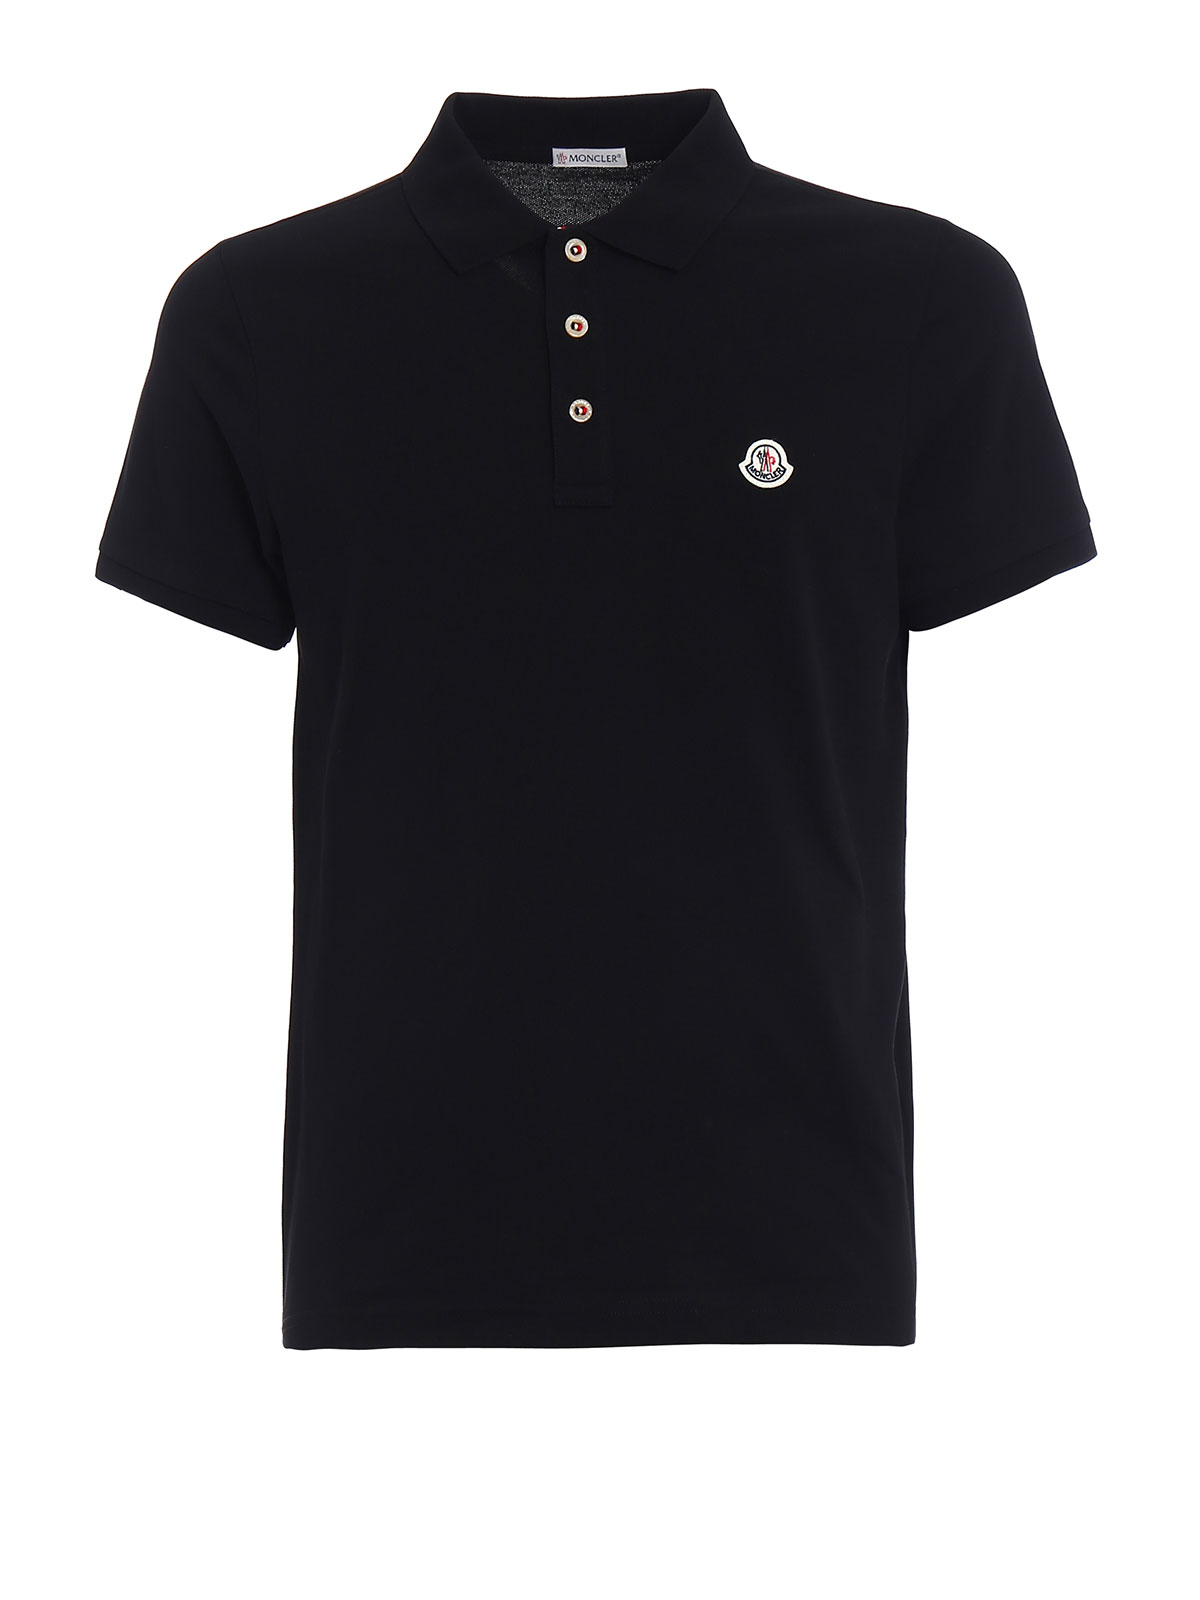 Tricolour placket black polo shirt 